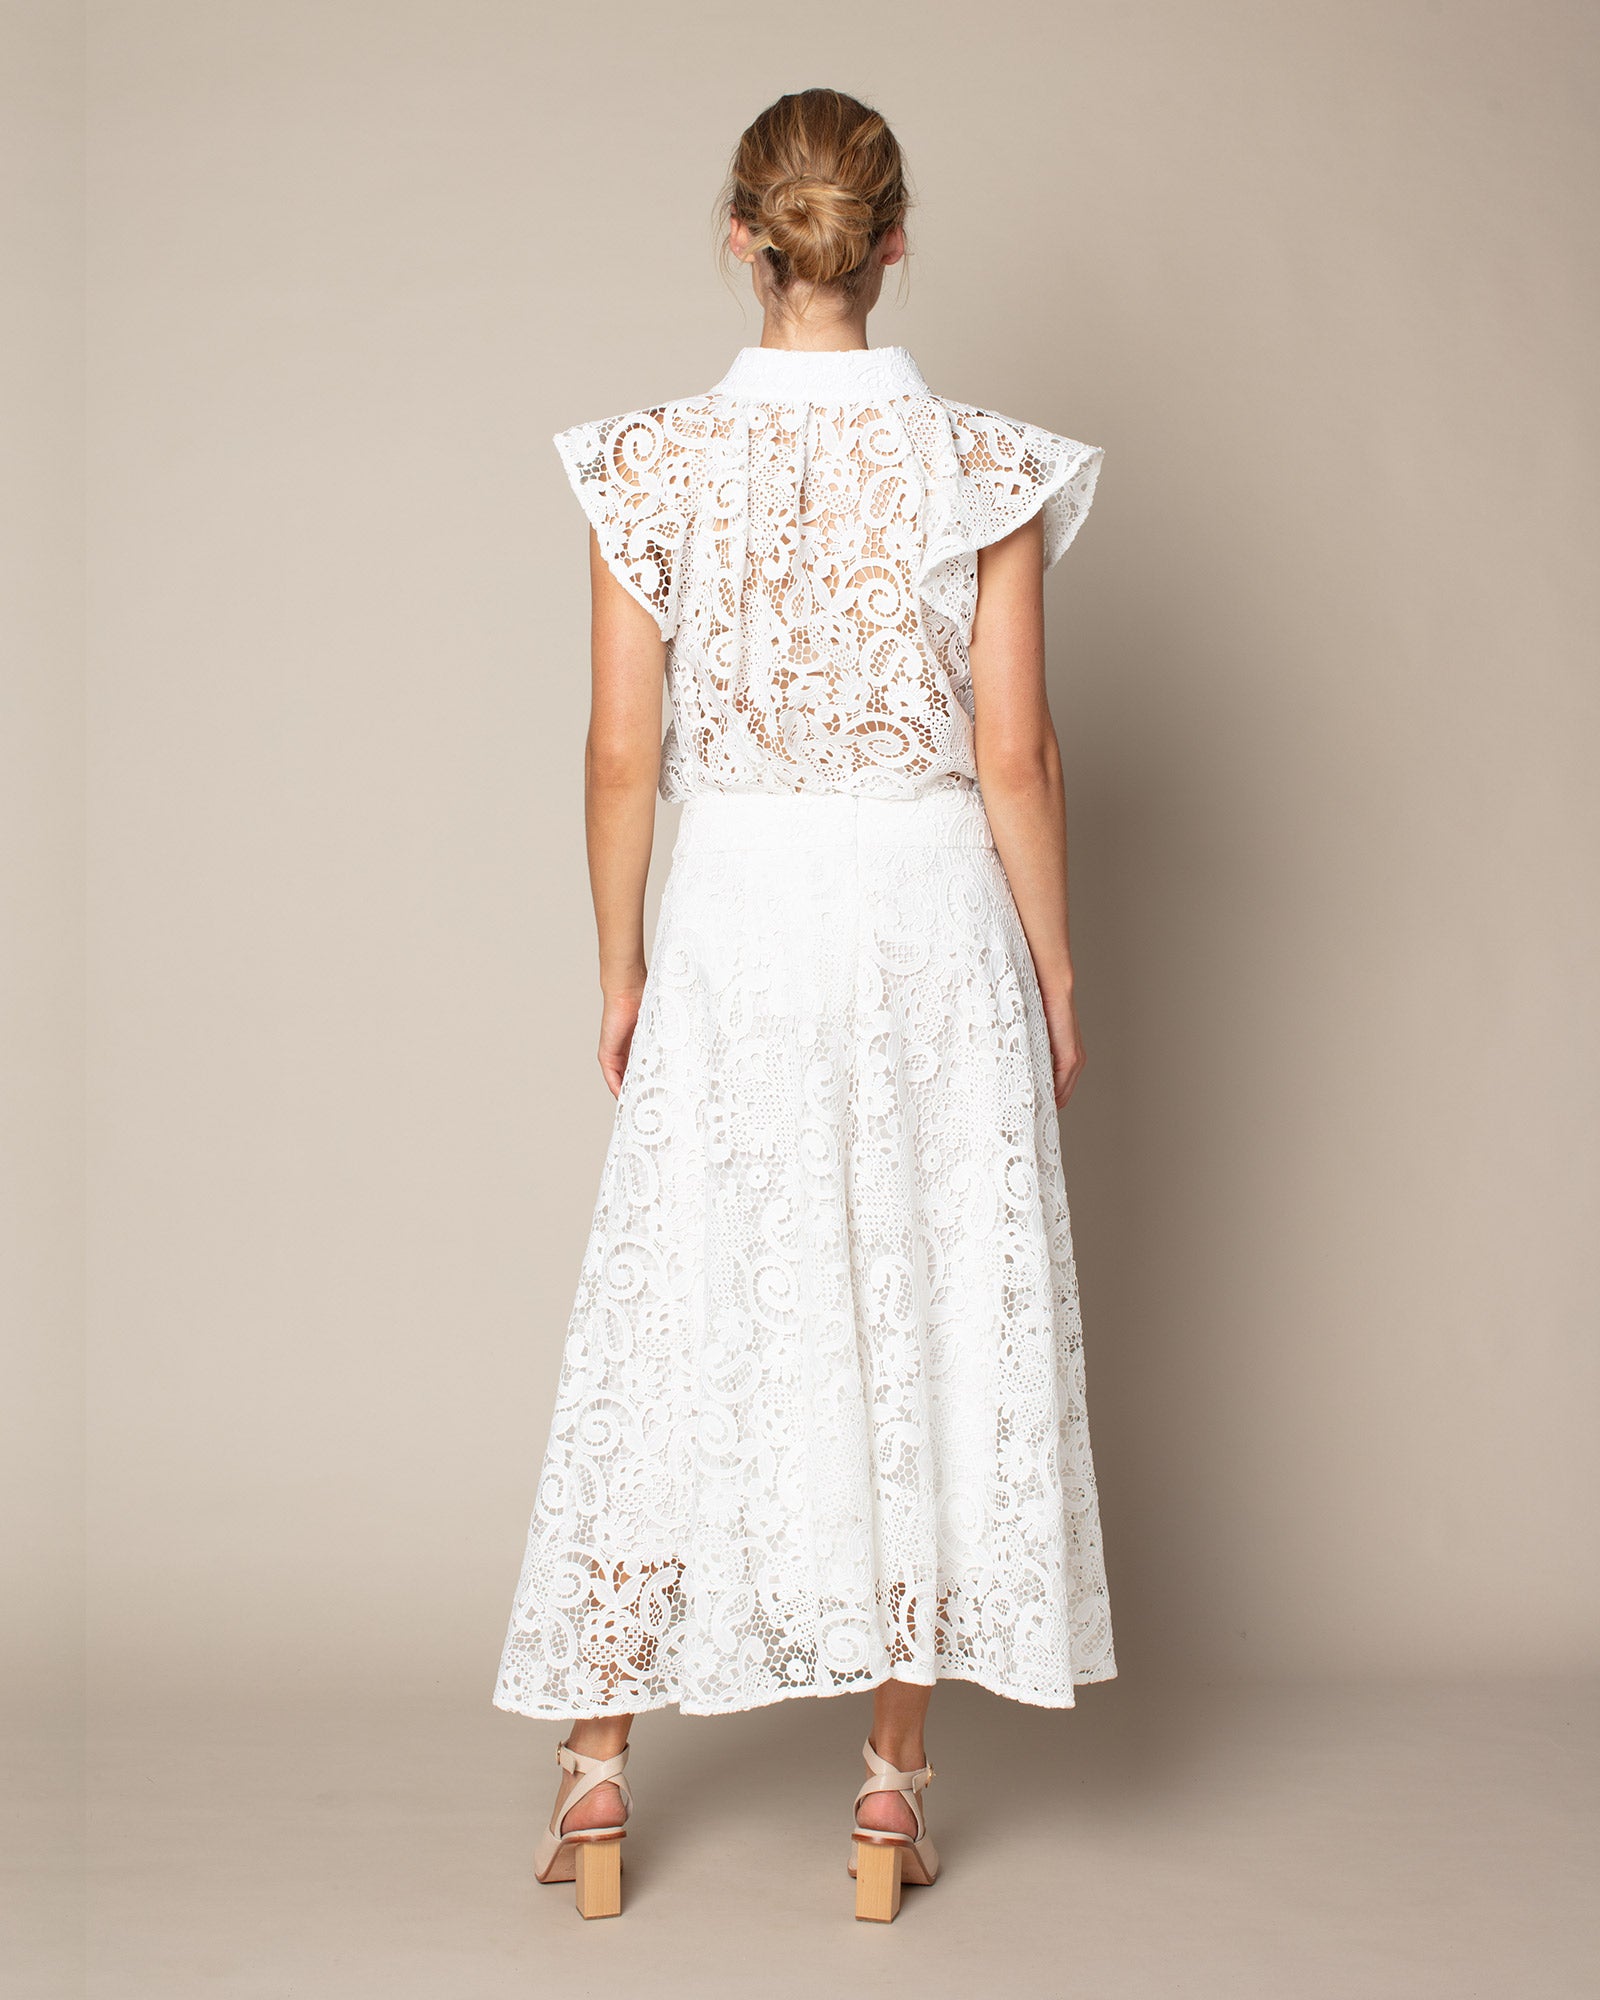 echelon skirt - porcelain lace